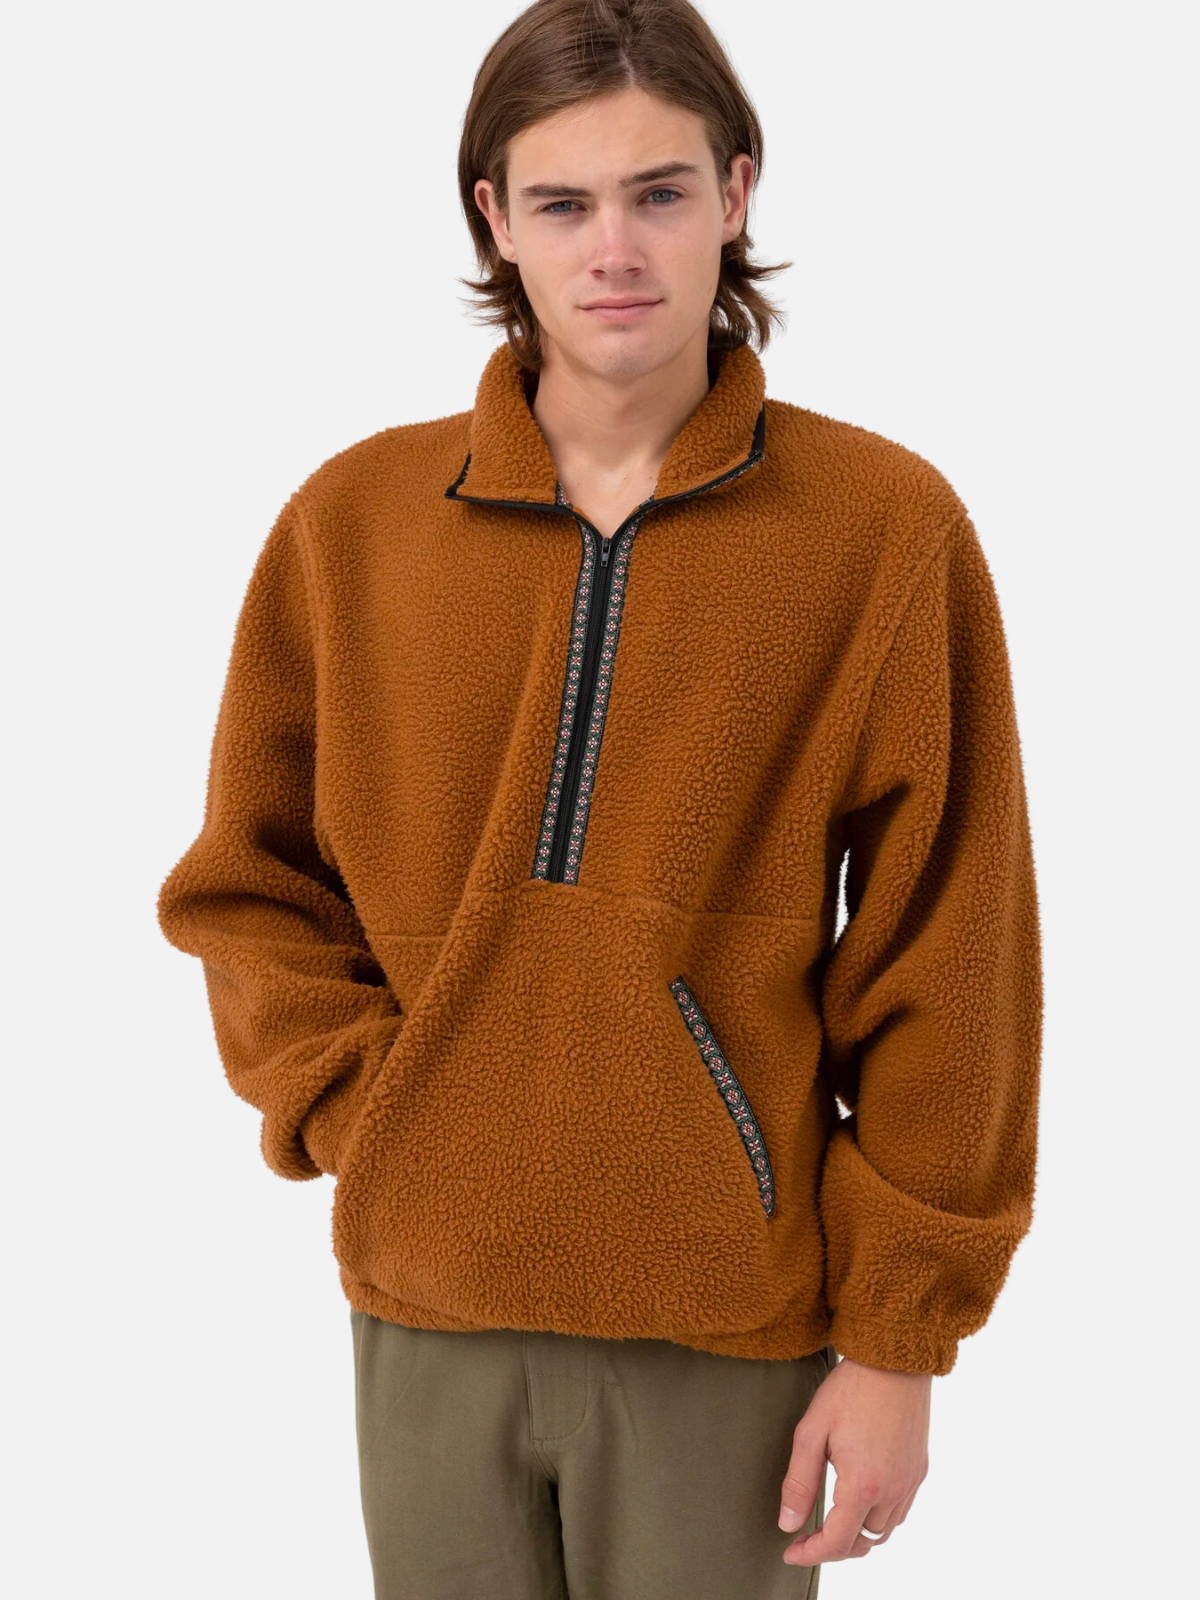 rhythm sherpa pullover half zip jacket sweatshirt ochre tobacco brown kangaroo pocket elastic cuff kempt athens ga georgia men's clothing store